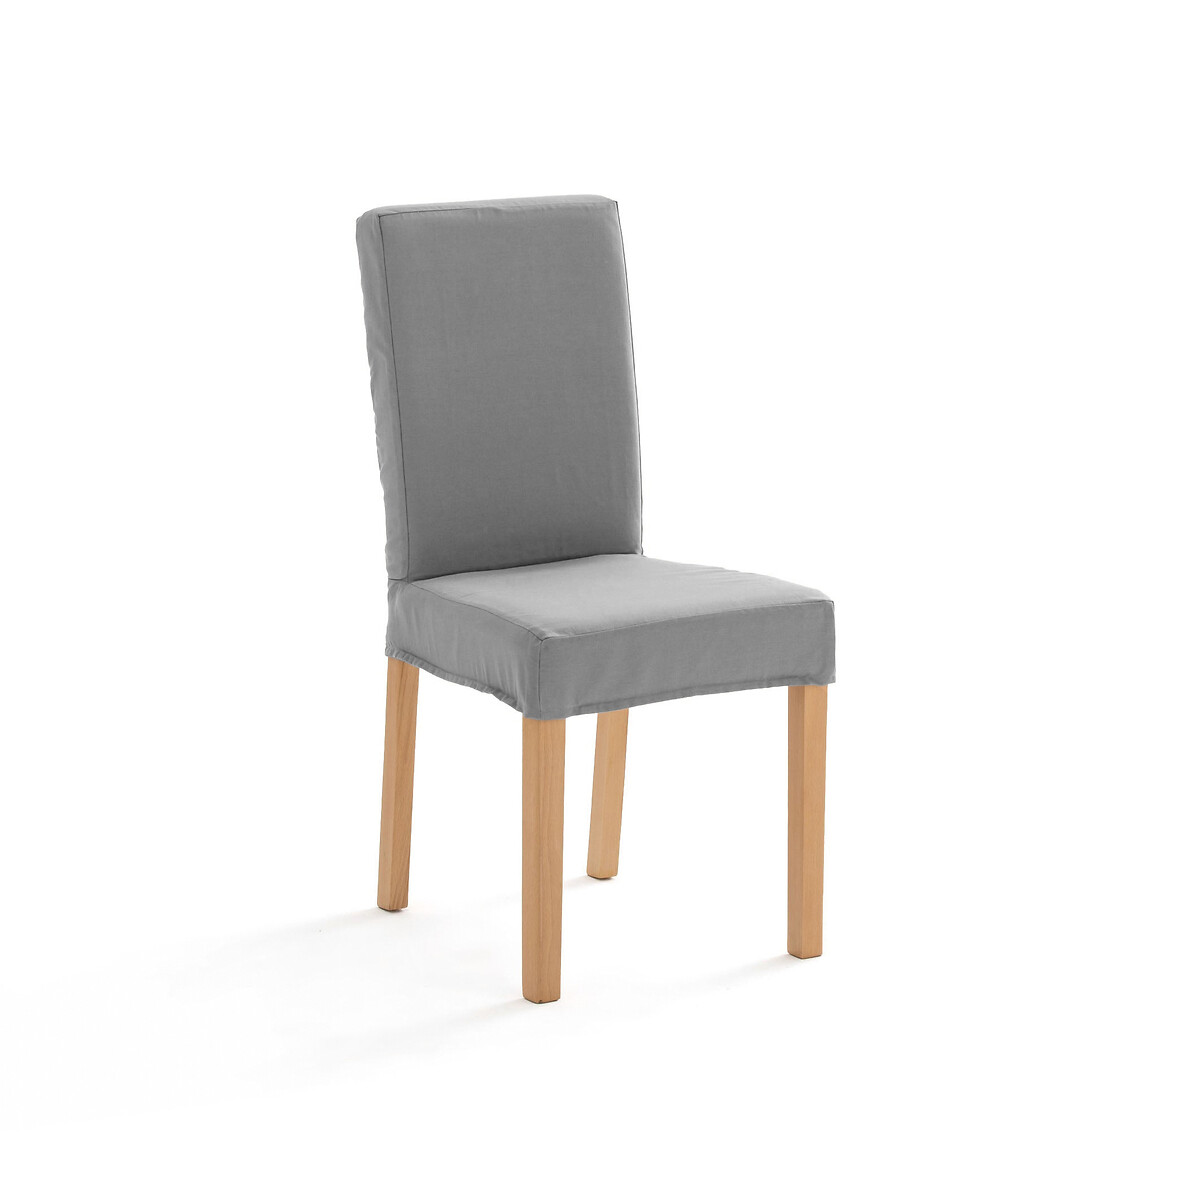 Чехол На стул из хлопка DOMME единый размер серый